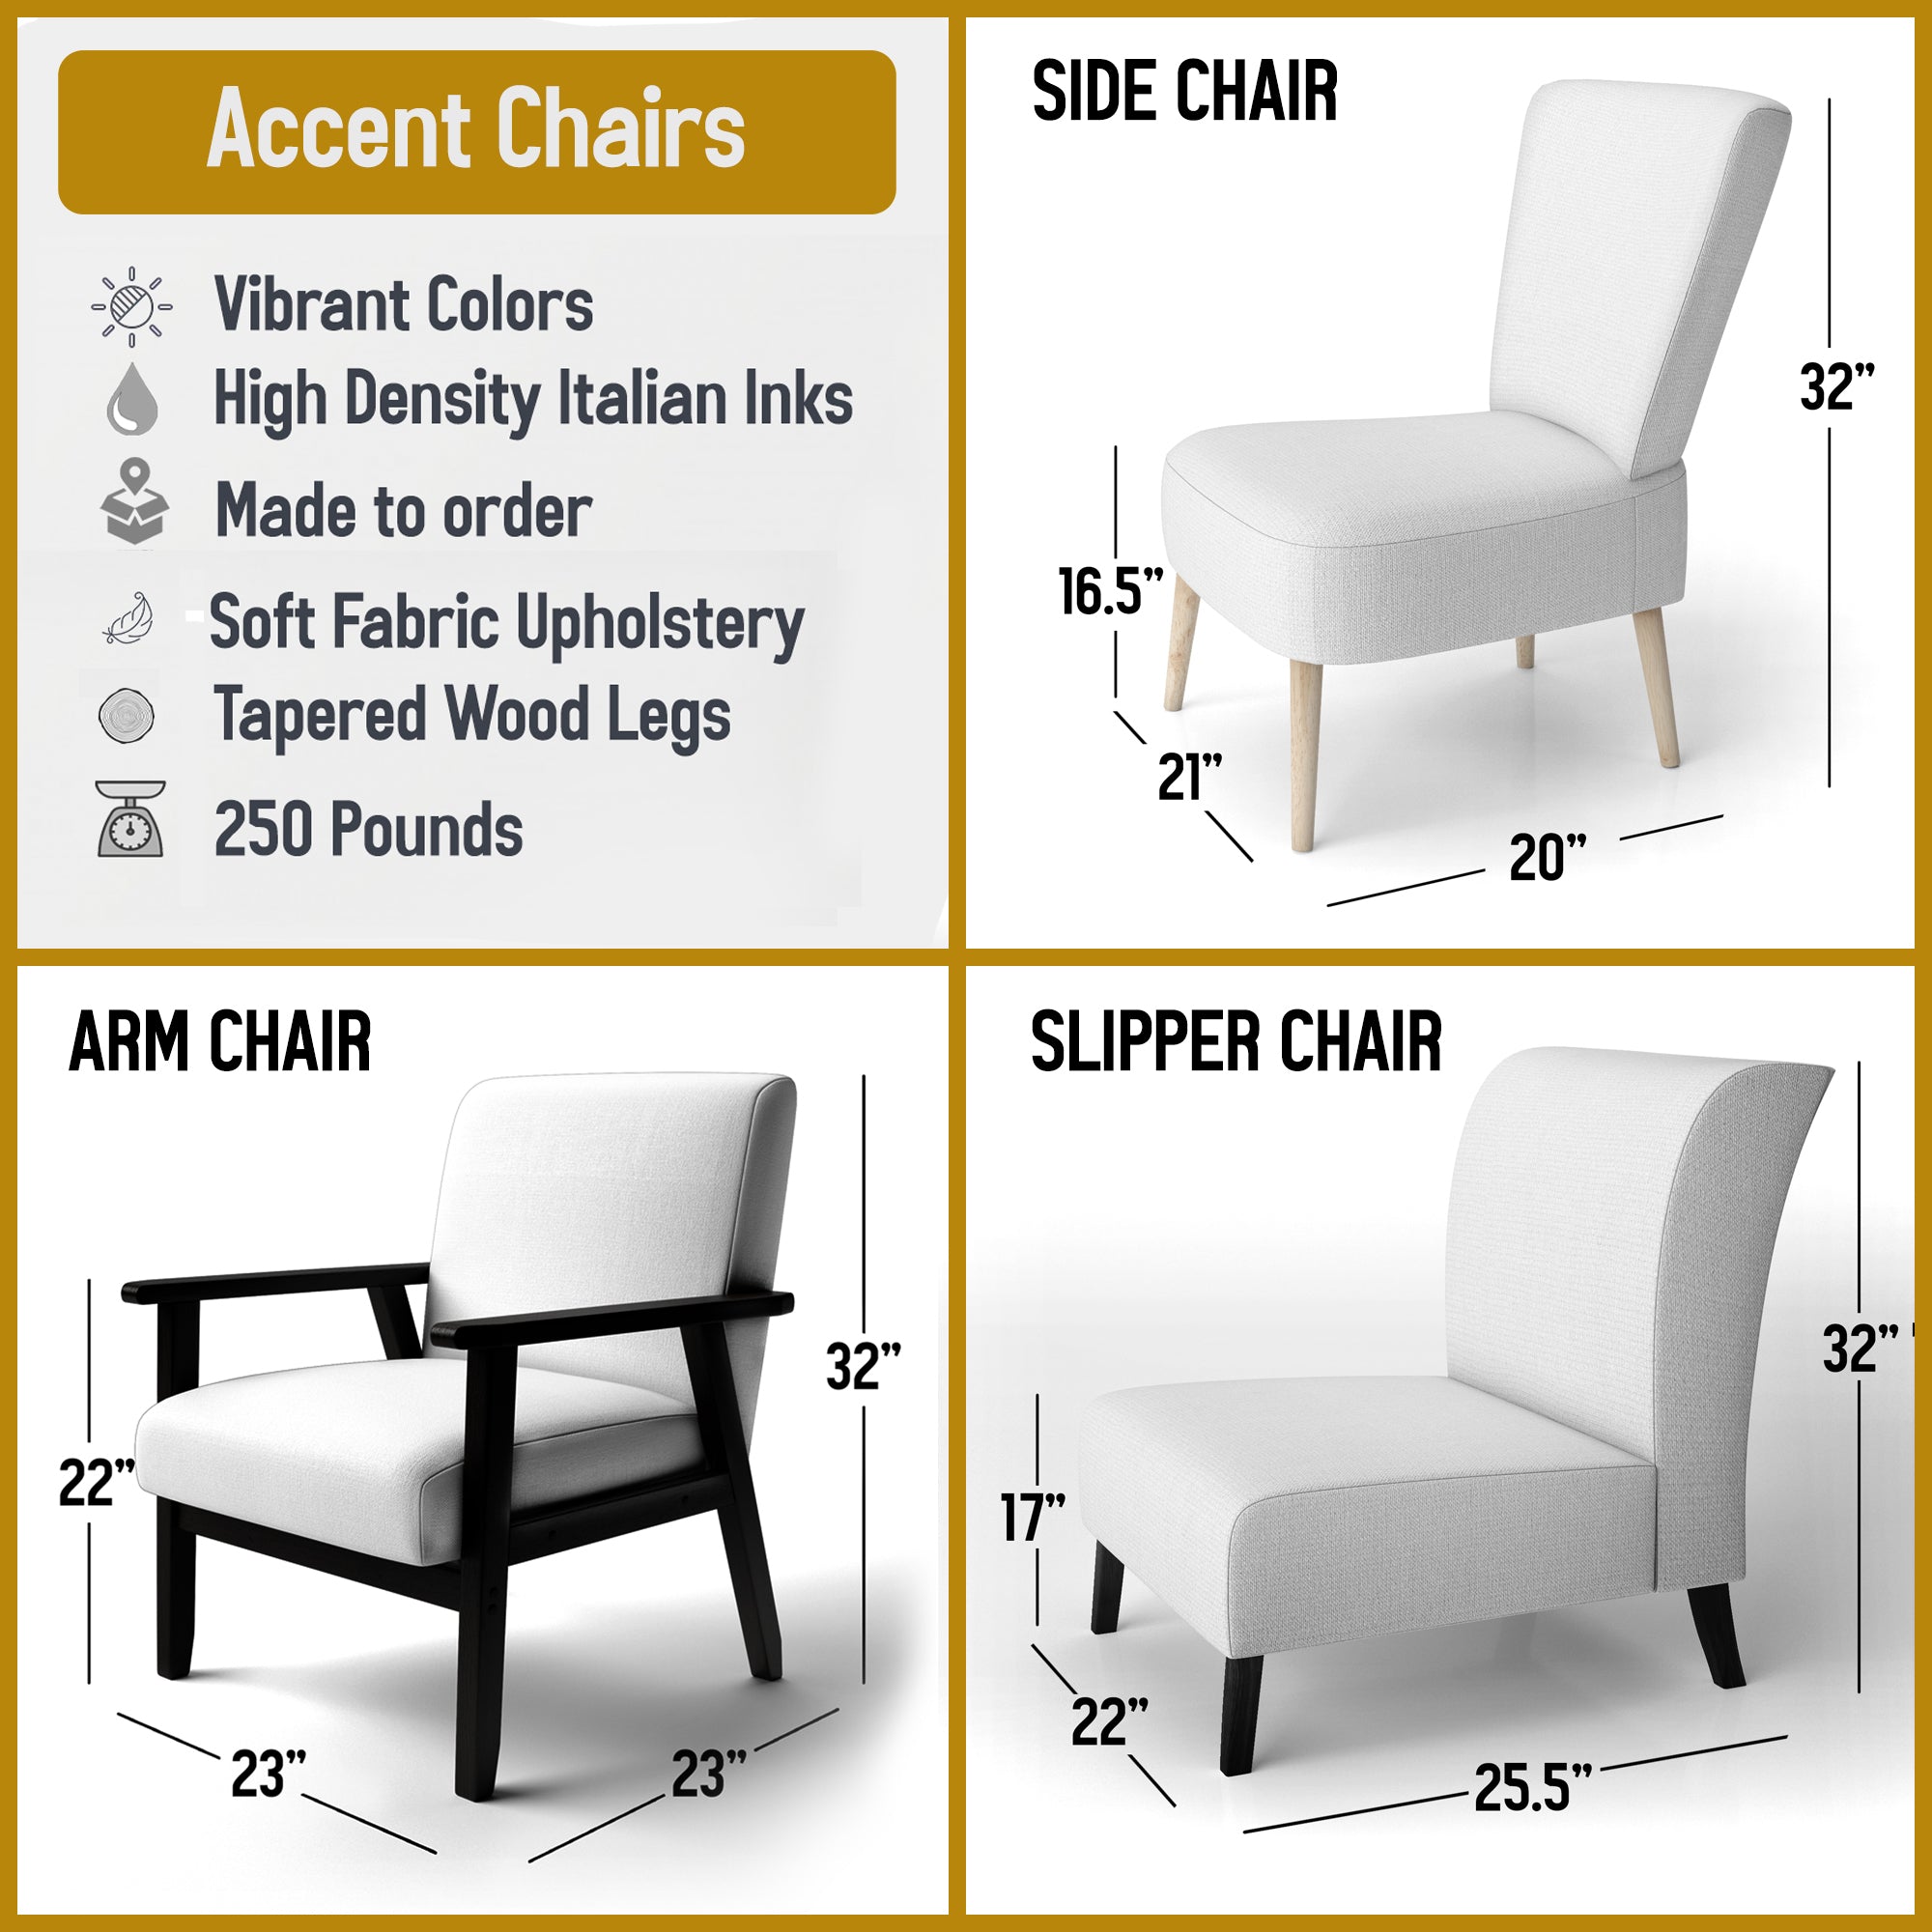 Geometric Monochrome Pattern II Mid-Century Accent Chair